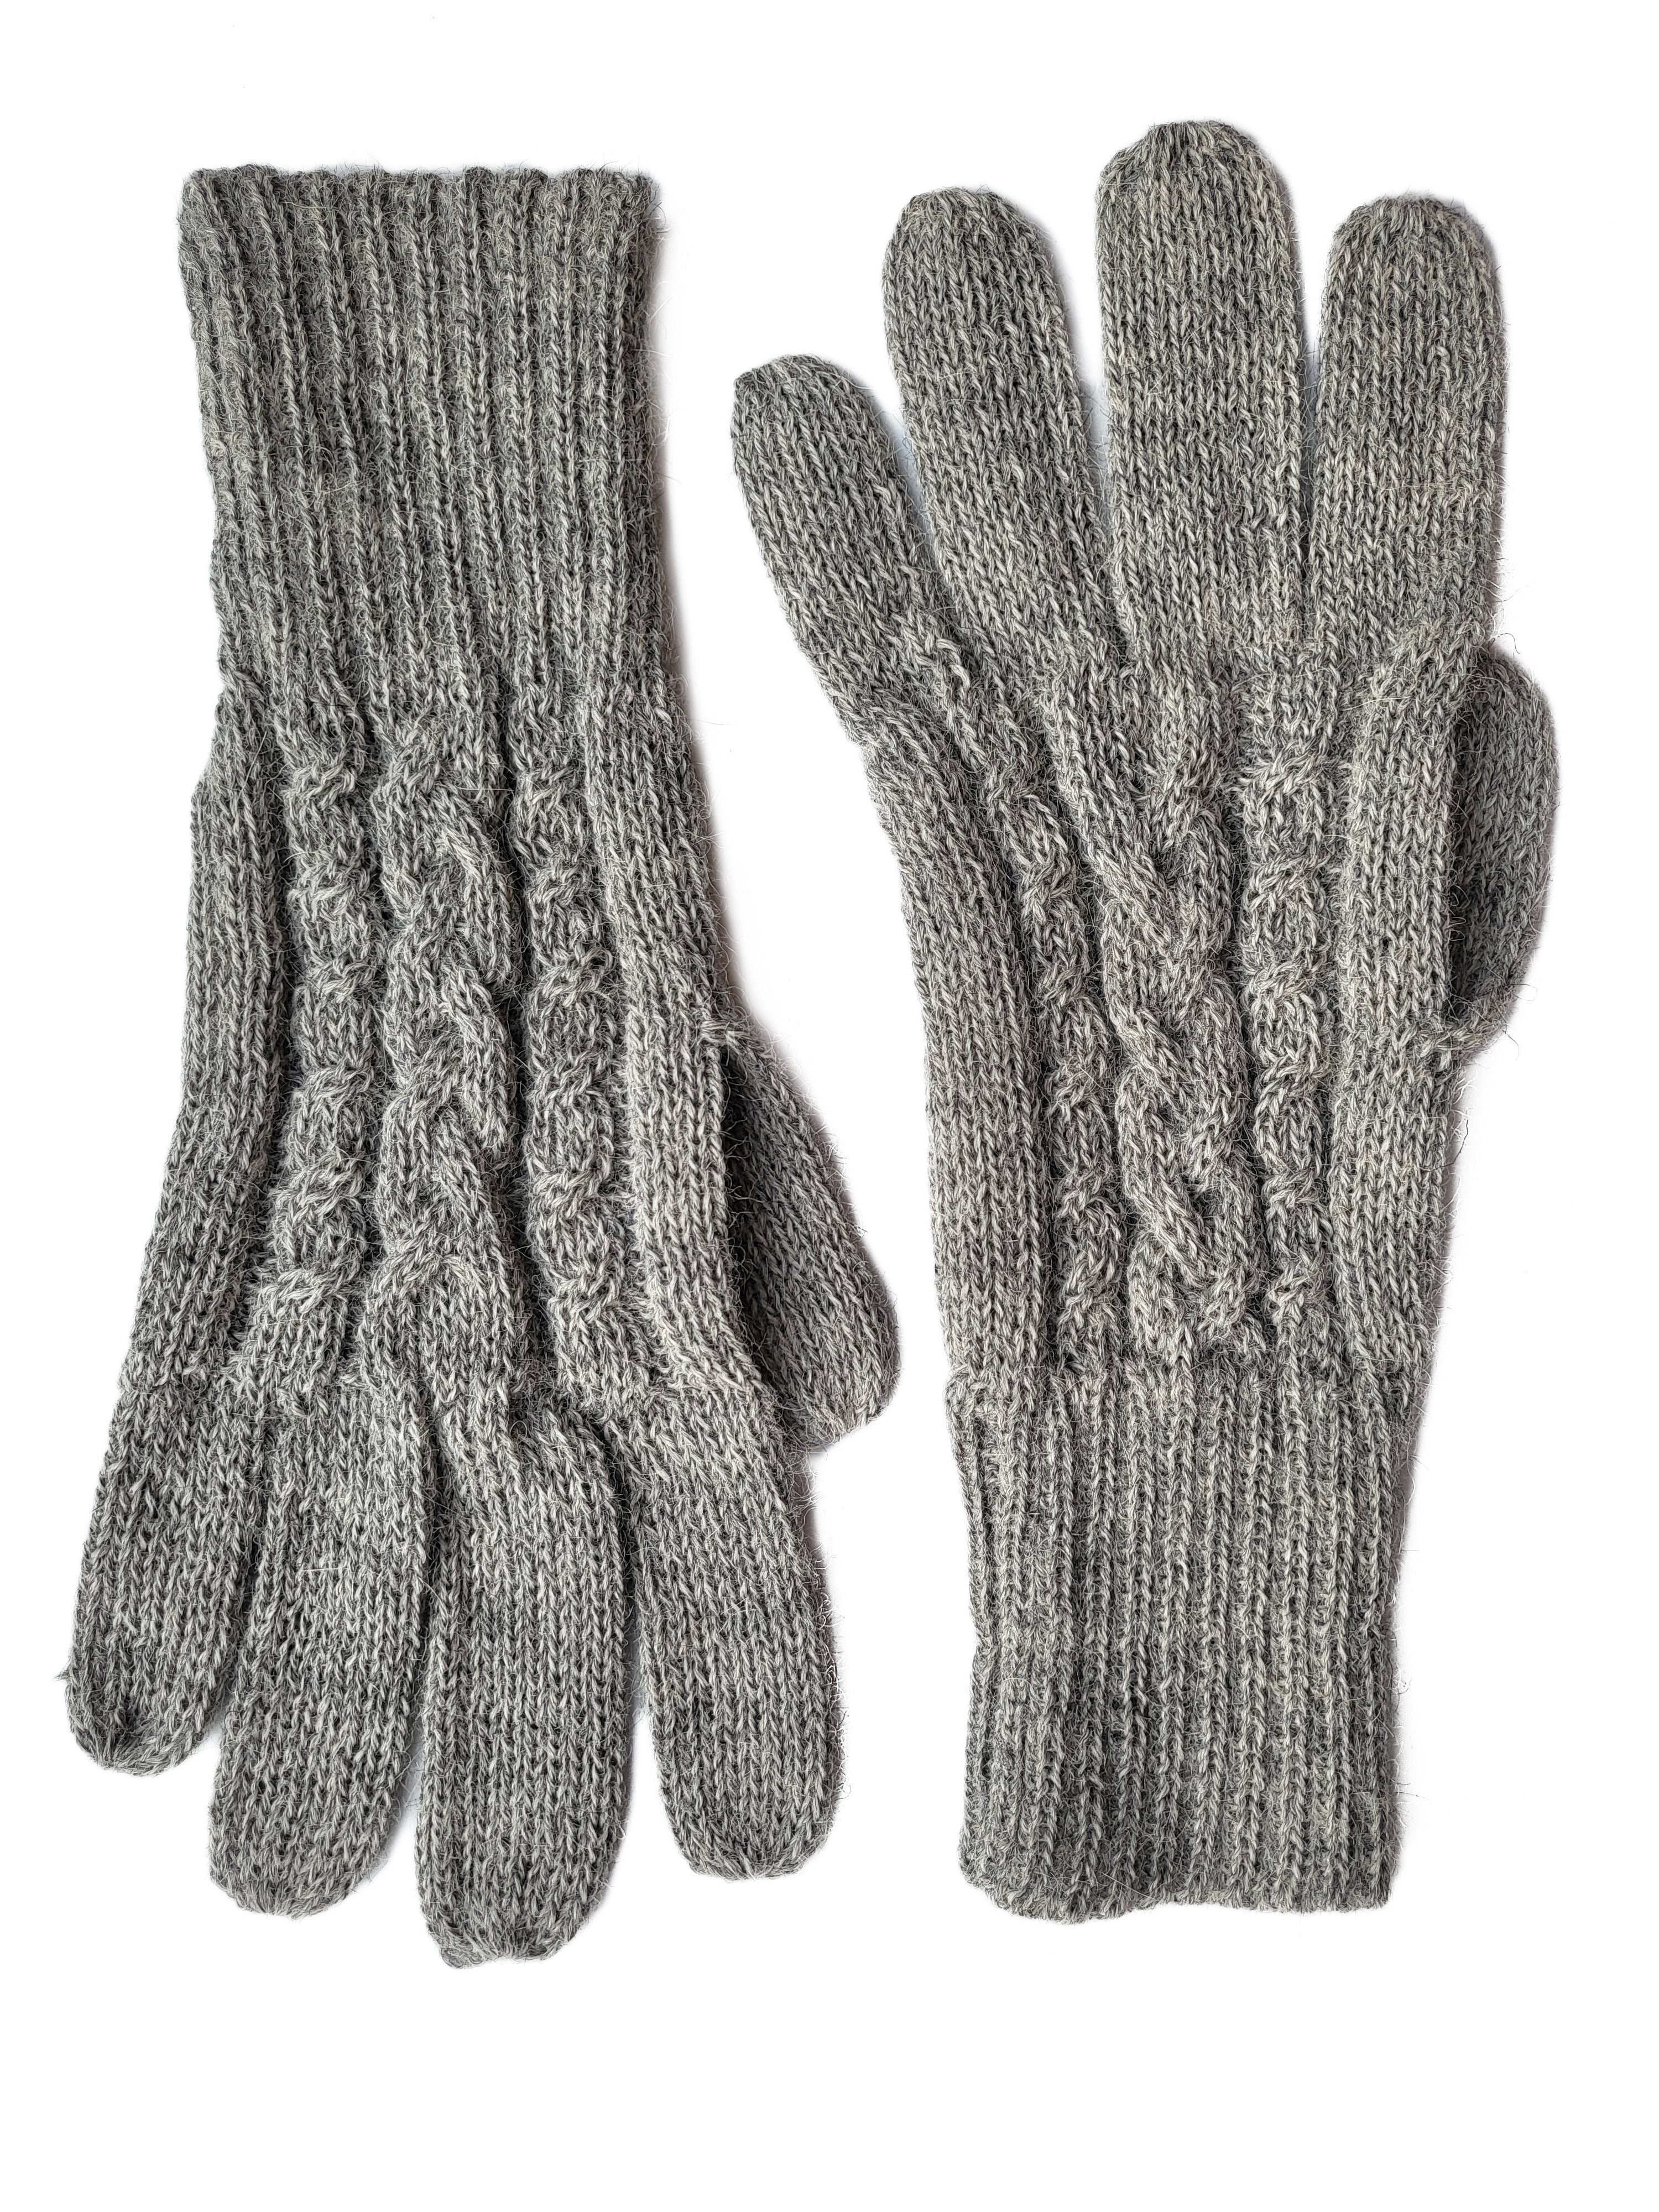 aus Guantibrada Alpaka grau Alpakawolle hell Gear 100% Fingerhandschuhe Strickhandschuhe Posh